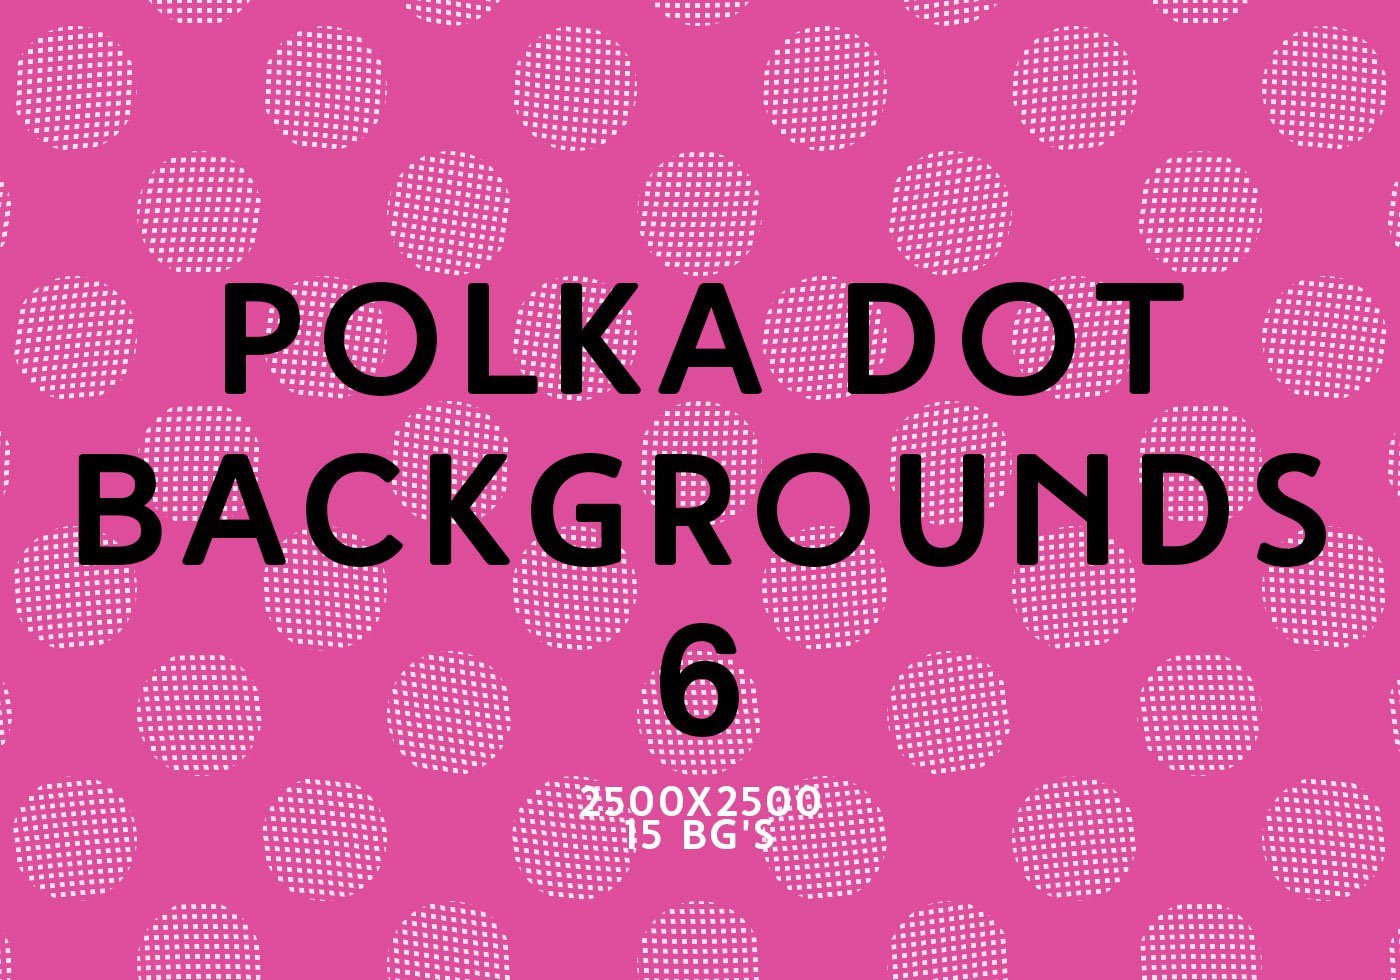 Polka Dot Backgrounds 6 Free shop Brushes at Brusheezy